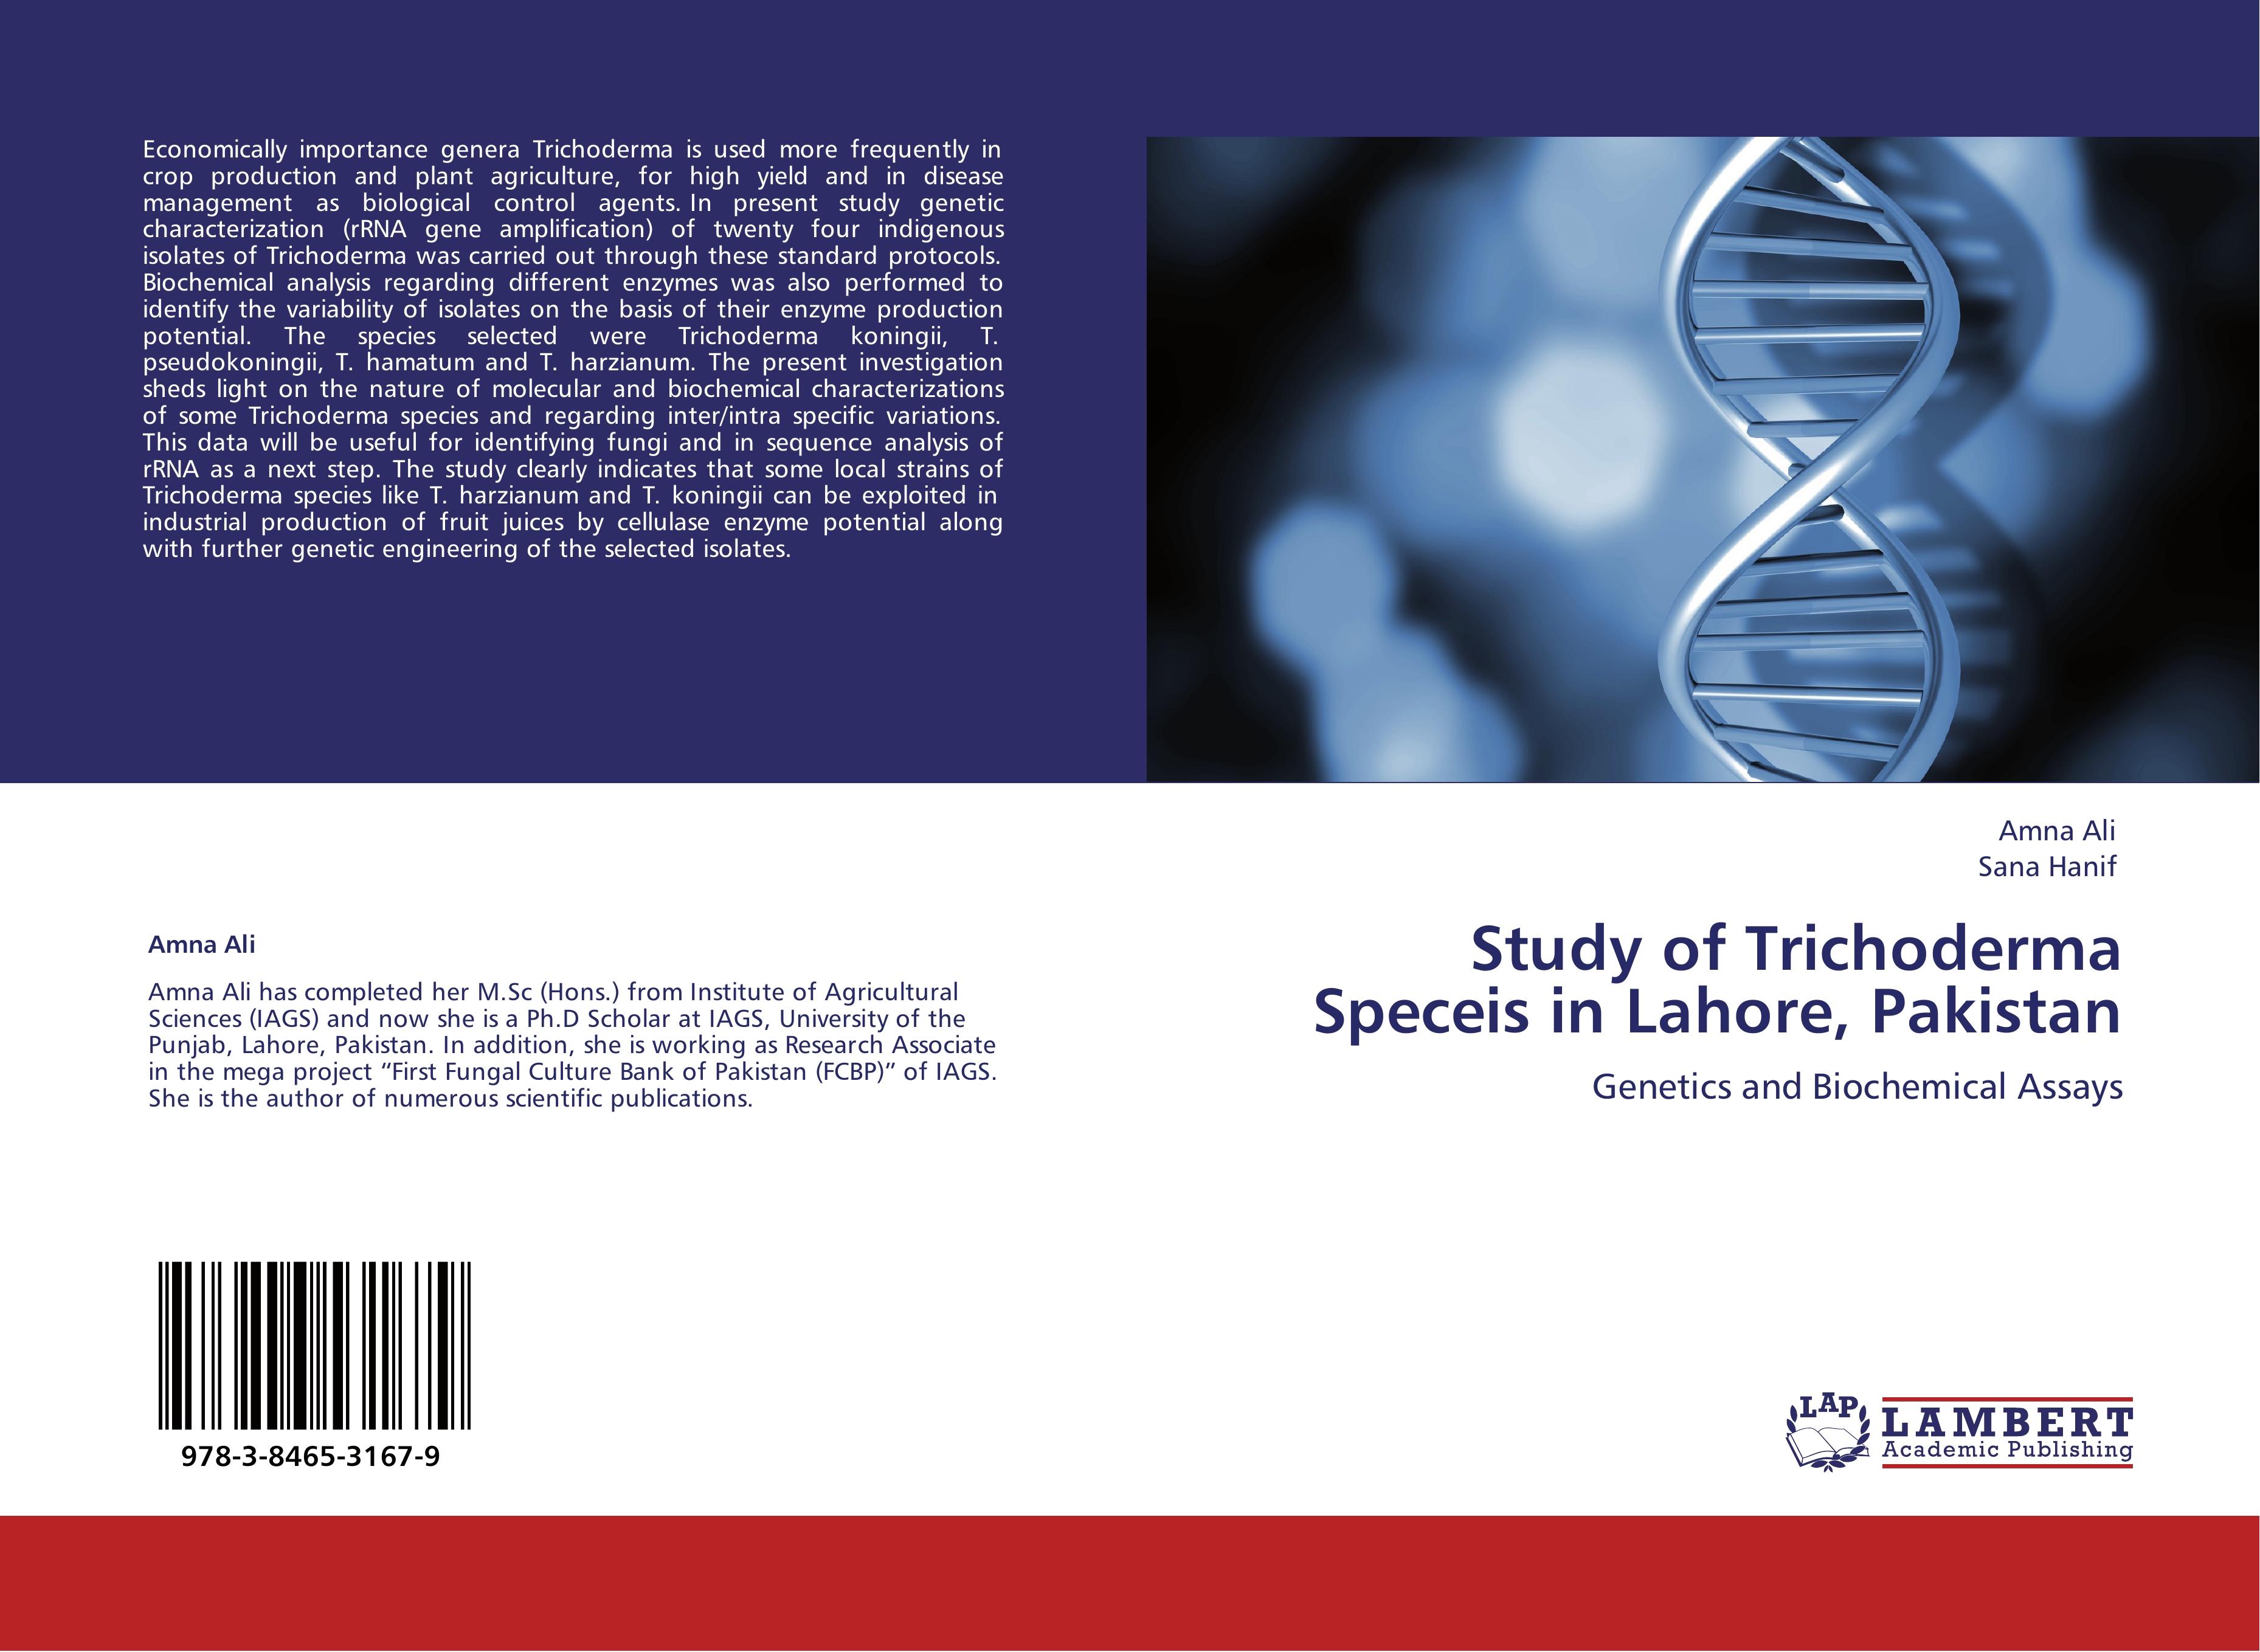 Study of Trichoderma Speceis in Lahore, Pakistan - AMNA ALI|Sana Hanif